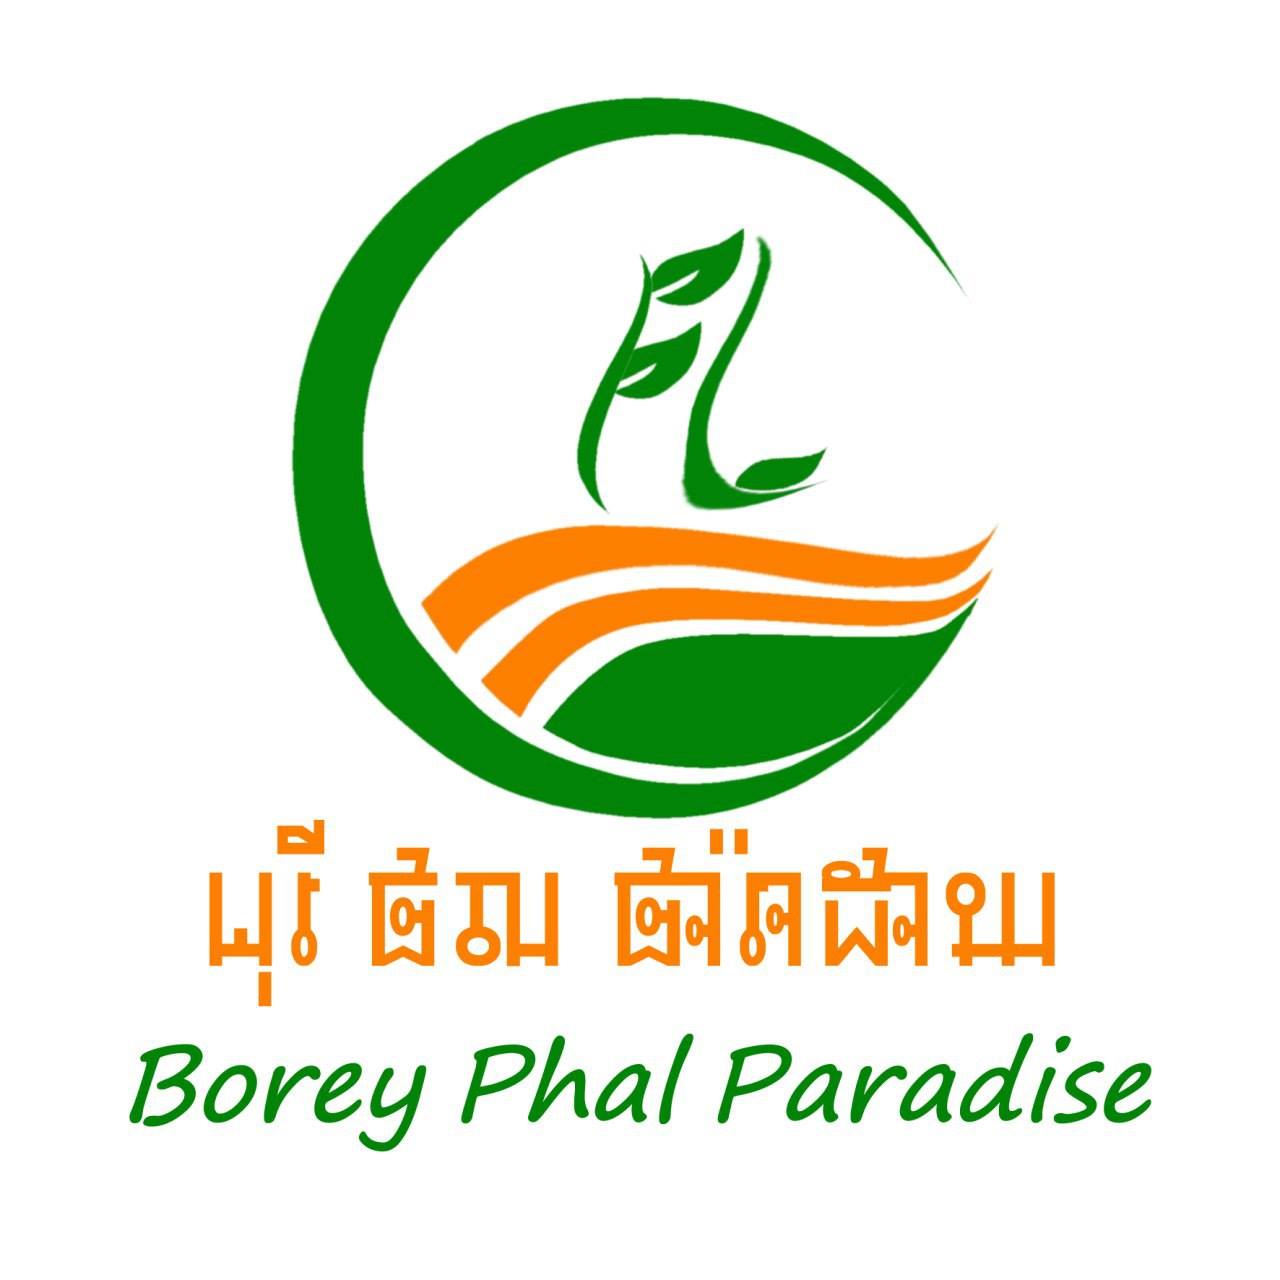 Borey Phal Paradise